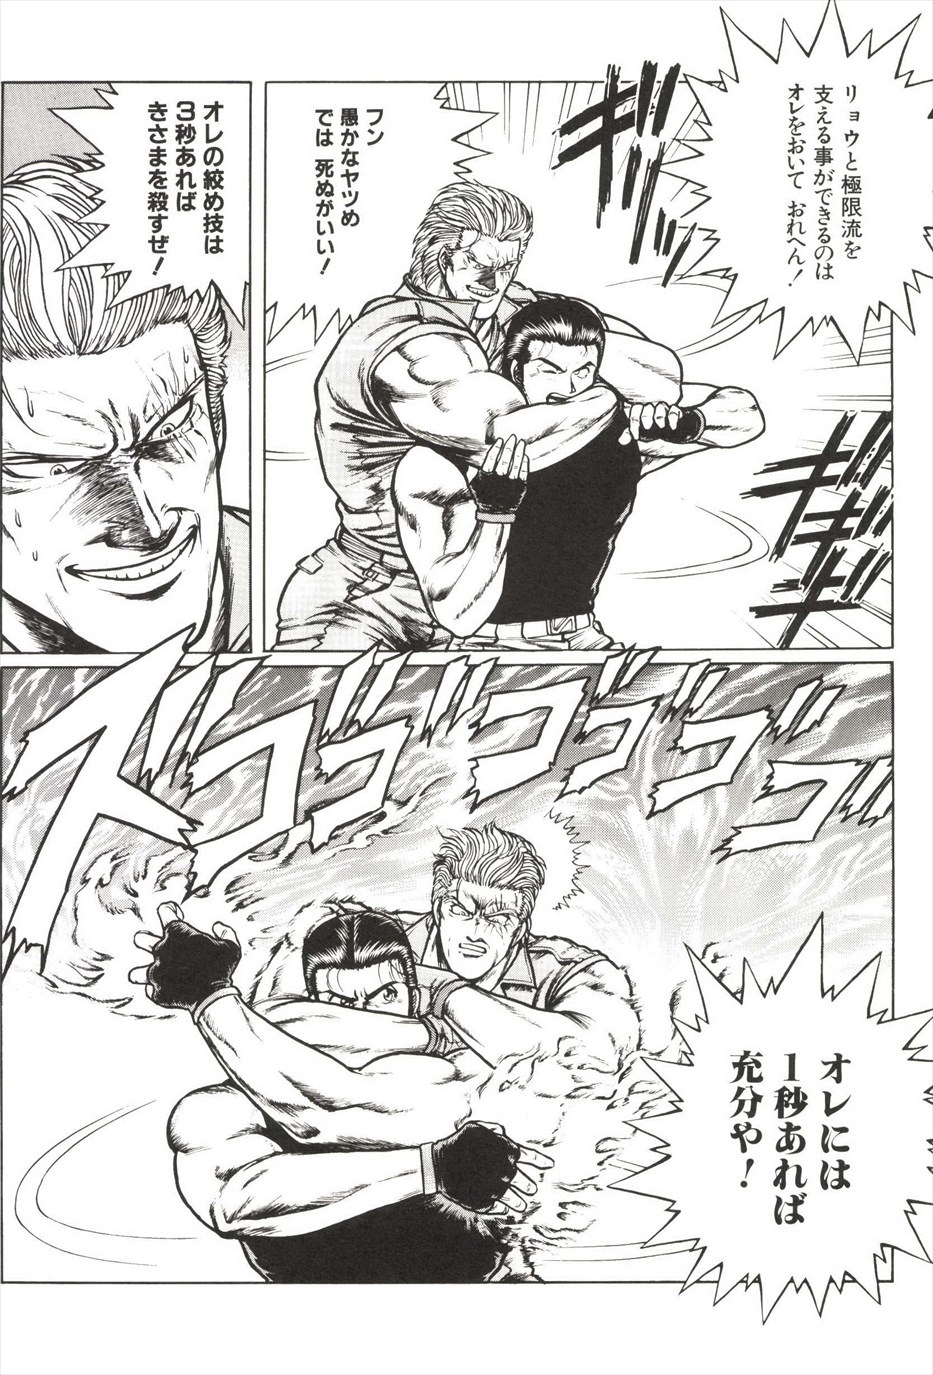 [amazishi etsuya] ART OF FIGHTING ryuuko no ken 2-2 67